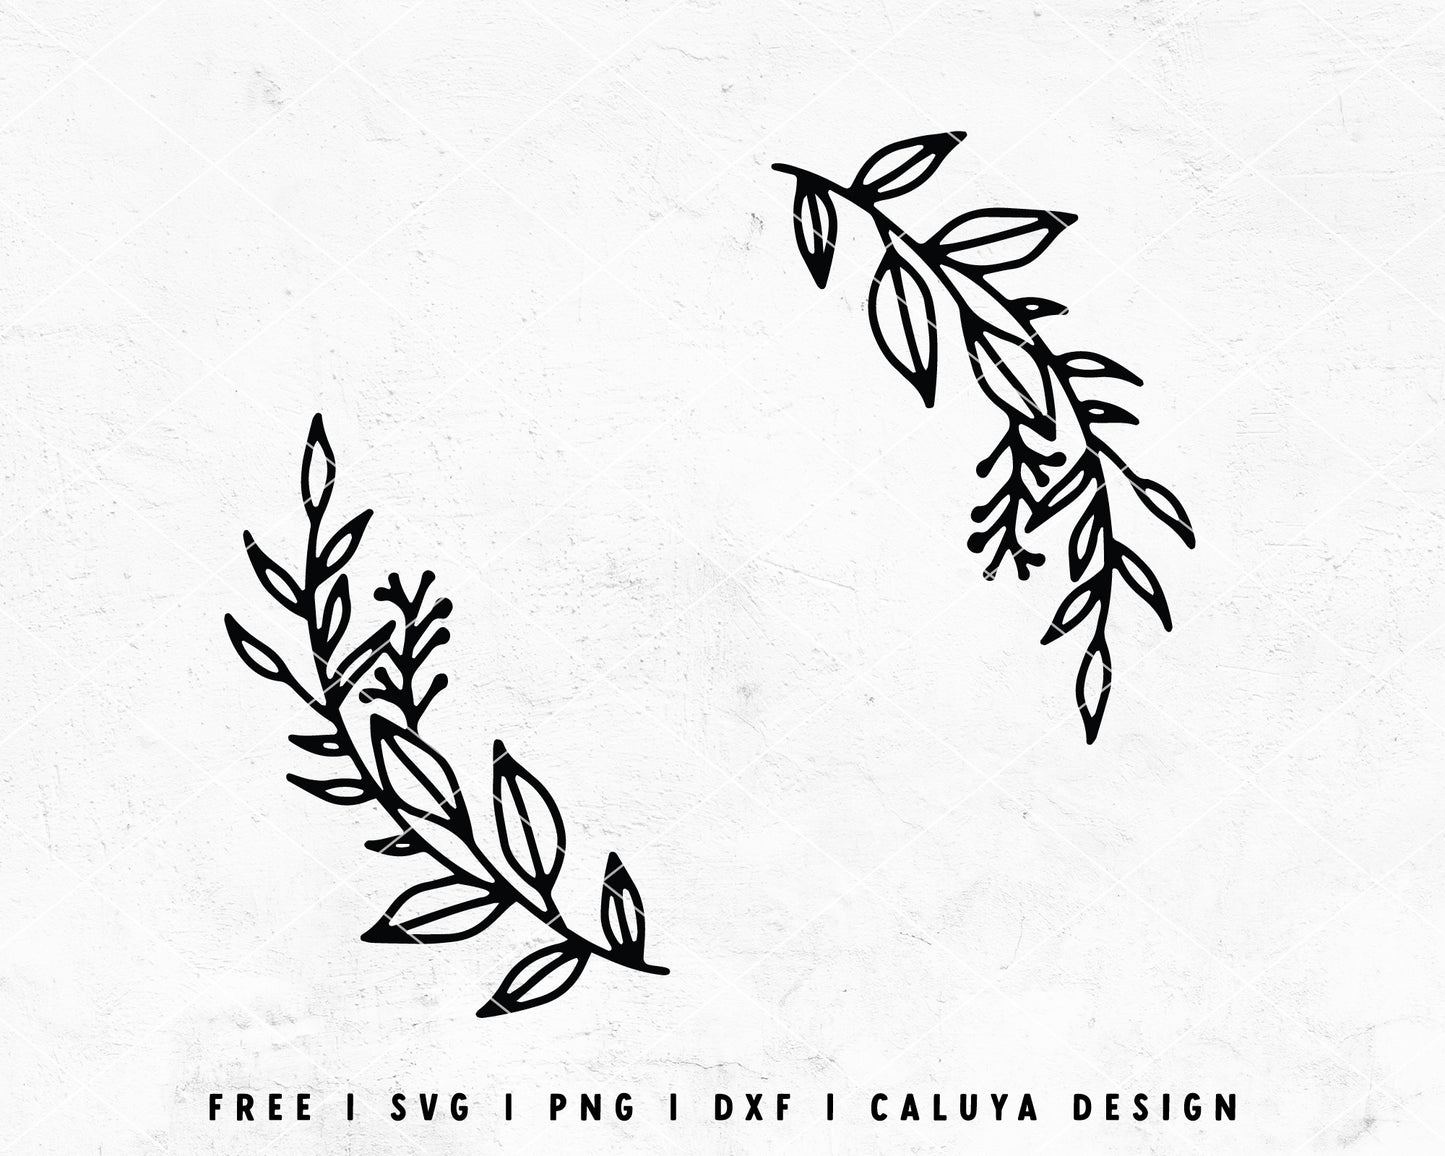 FREE Wreath SVG | Botanical Monogram SVG Cut File for Cricut, Cameo Silhouette | Free SVG Cut File